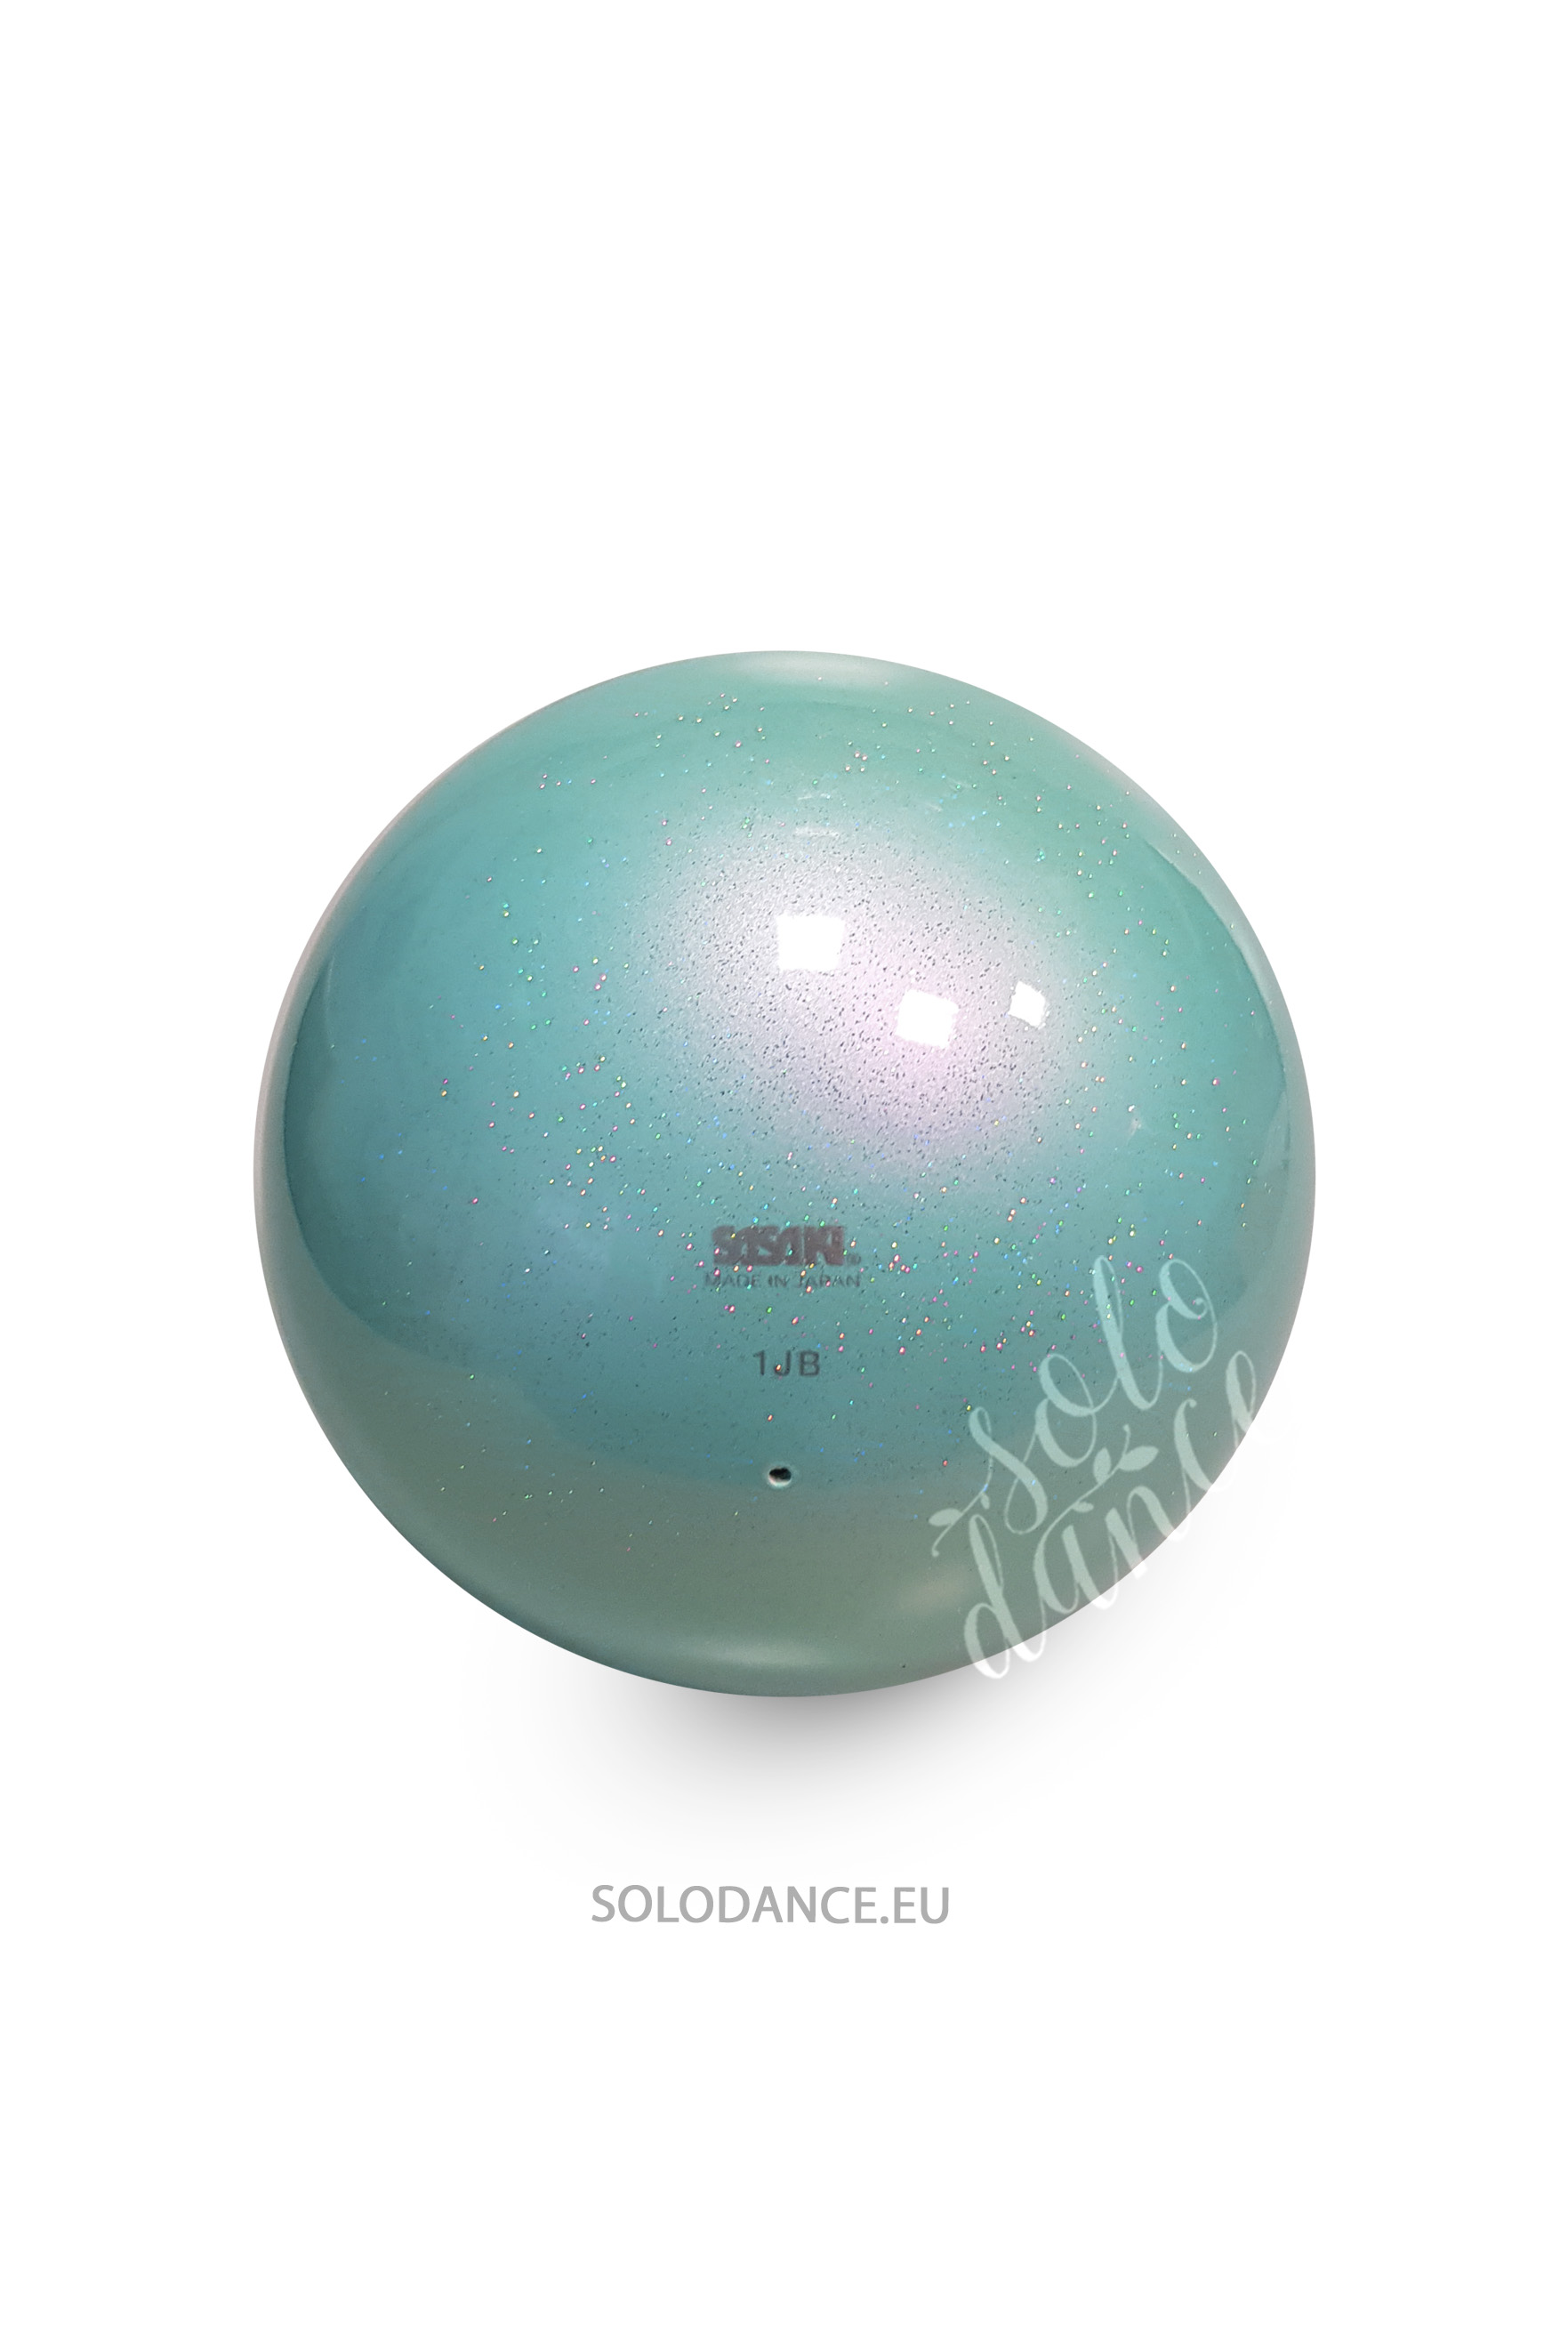 Rhythmic gymnastics ball Sasaki AURORA M-207MAU 17 cm LIBU (light blue)